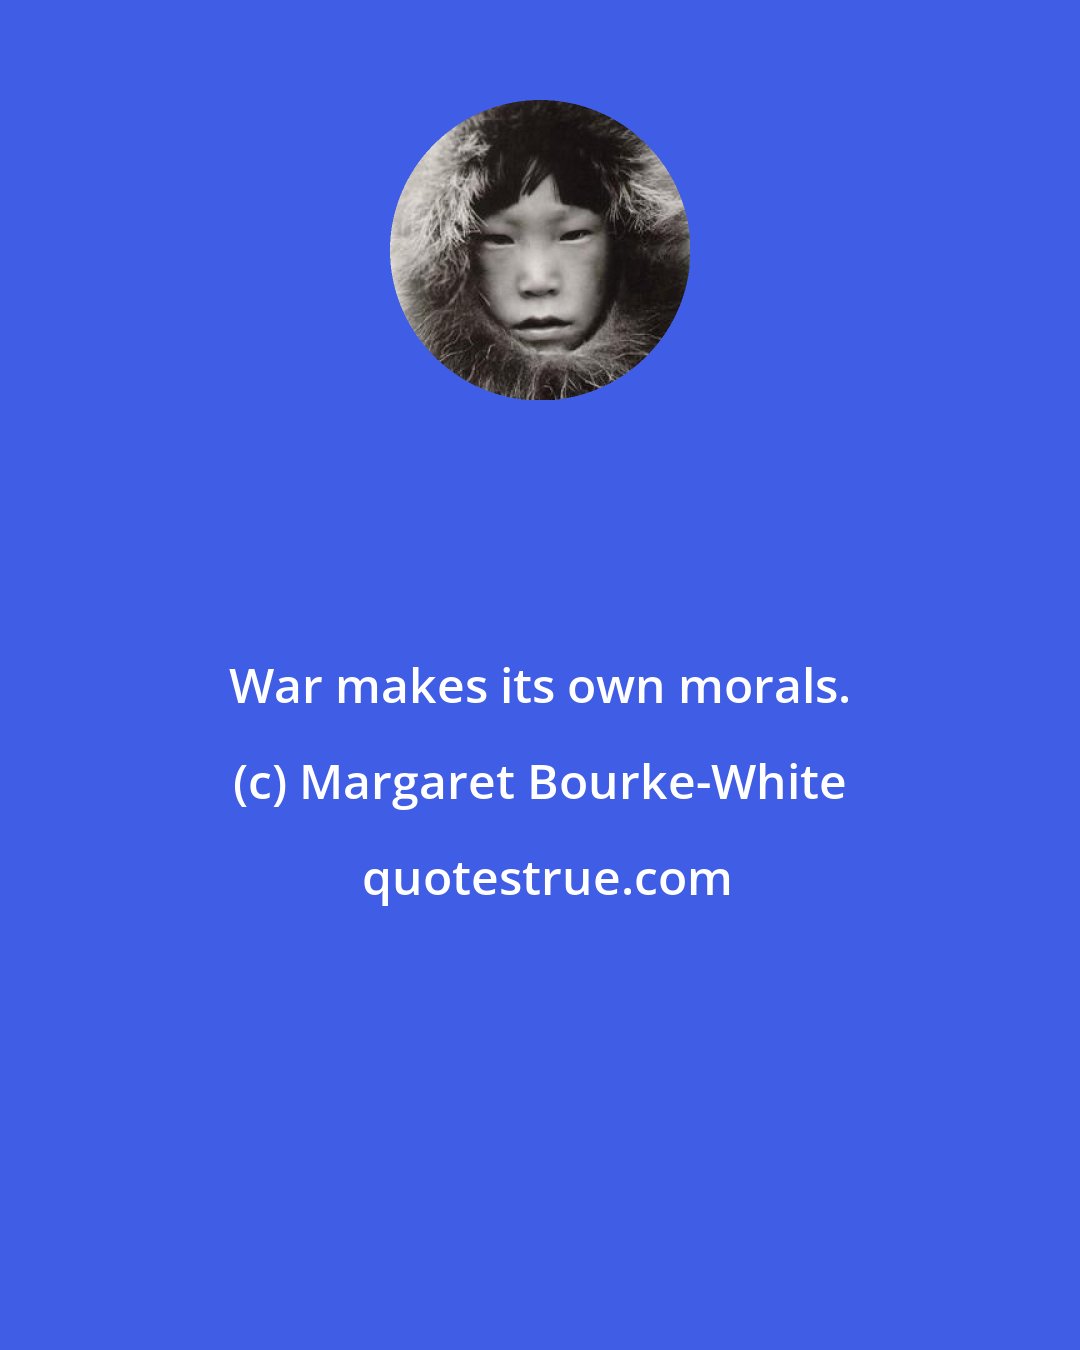 Margaret Bourke-White: War makes its own morals.